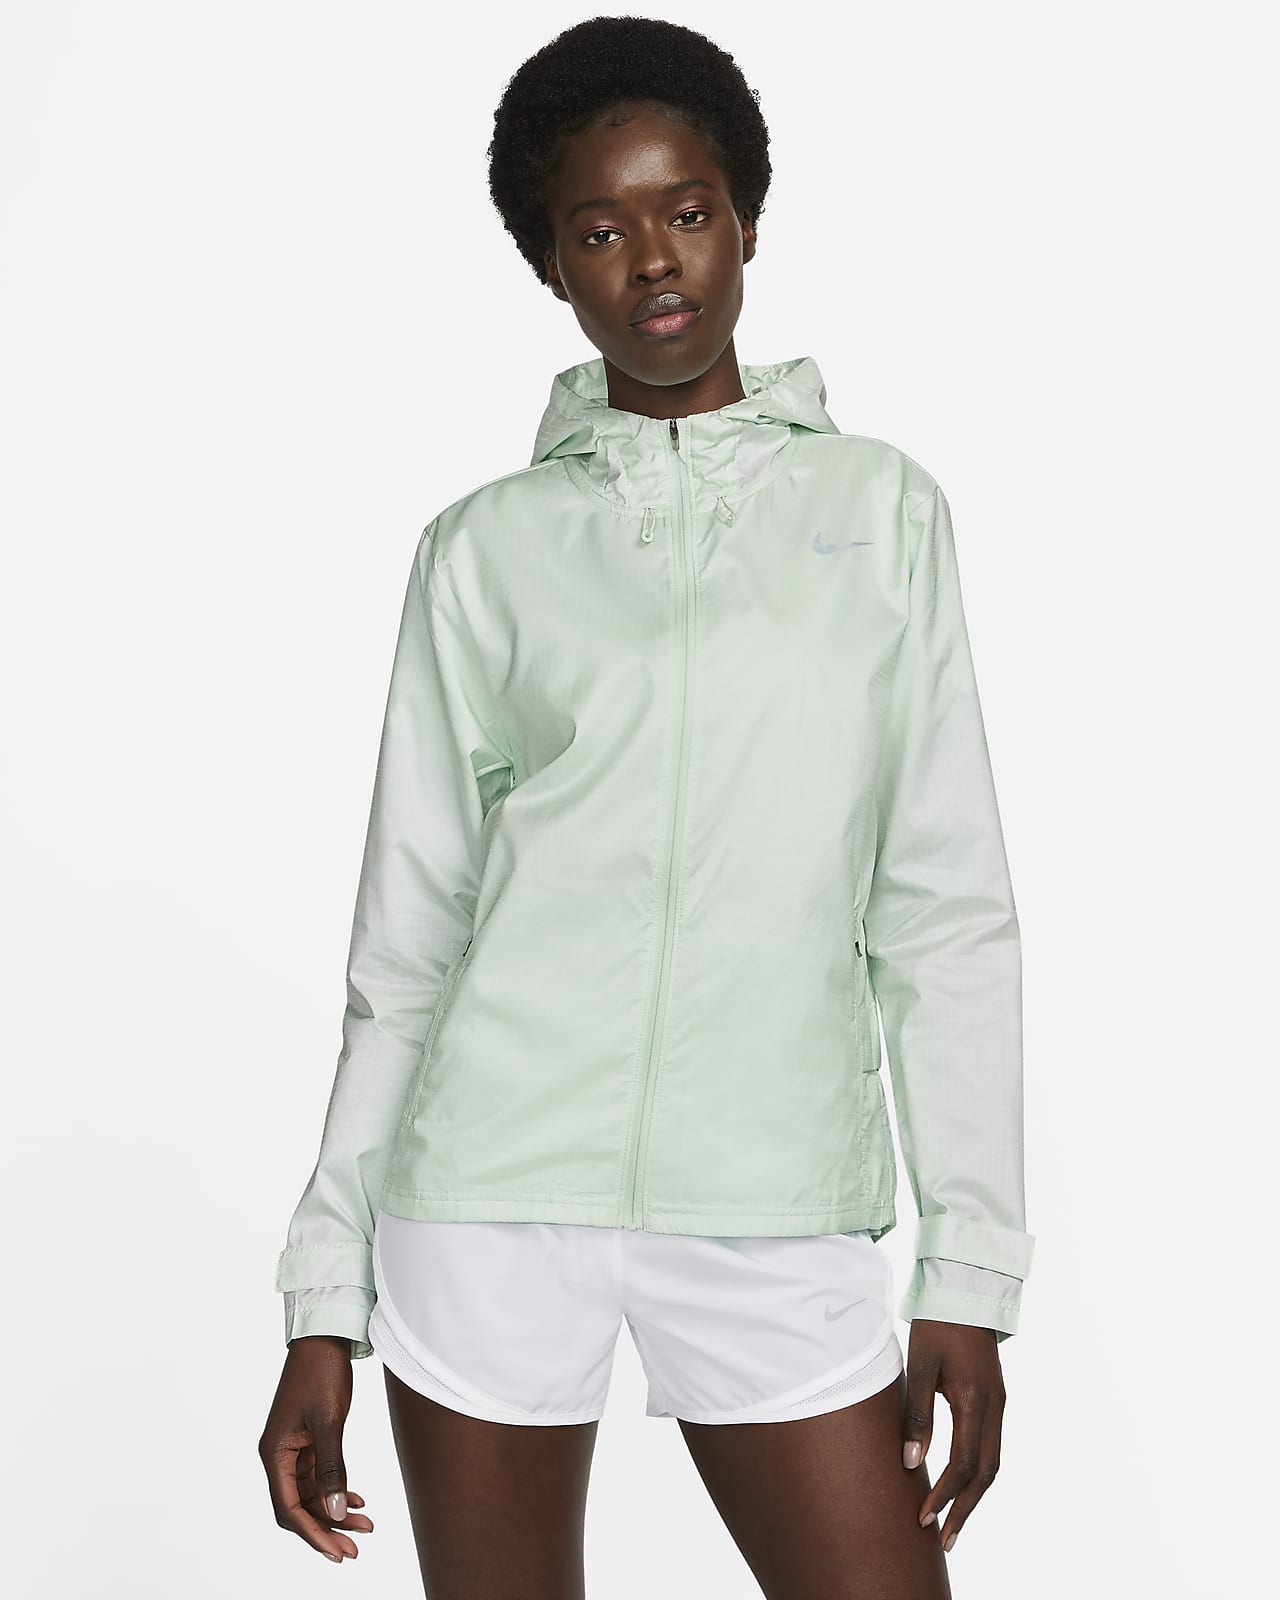 Nike Women's Running Jacket. Nike.com